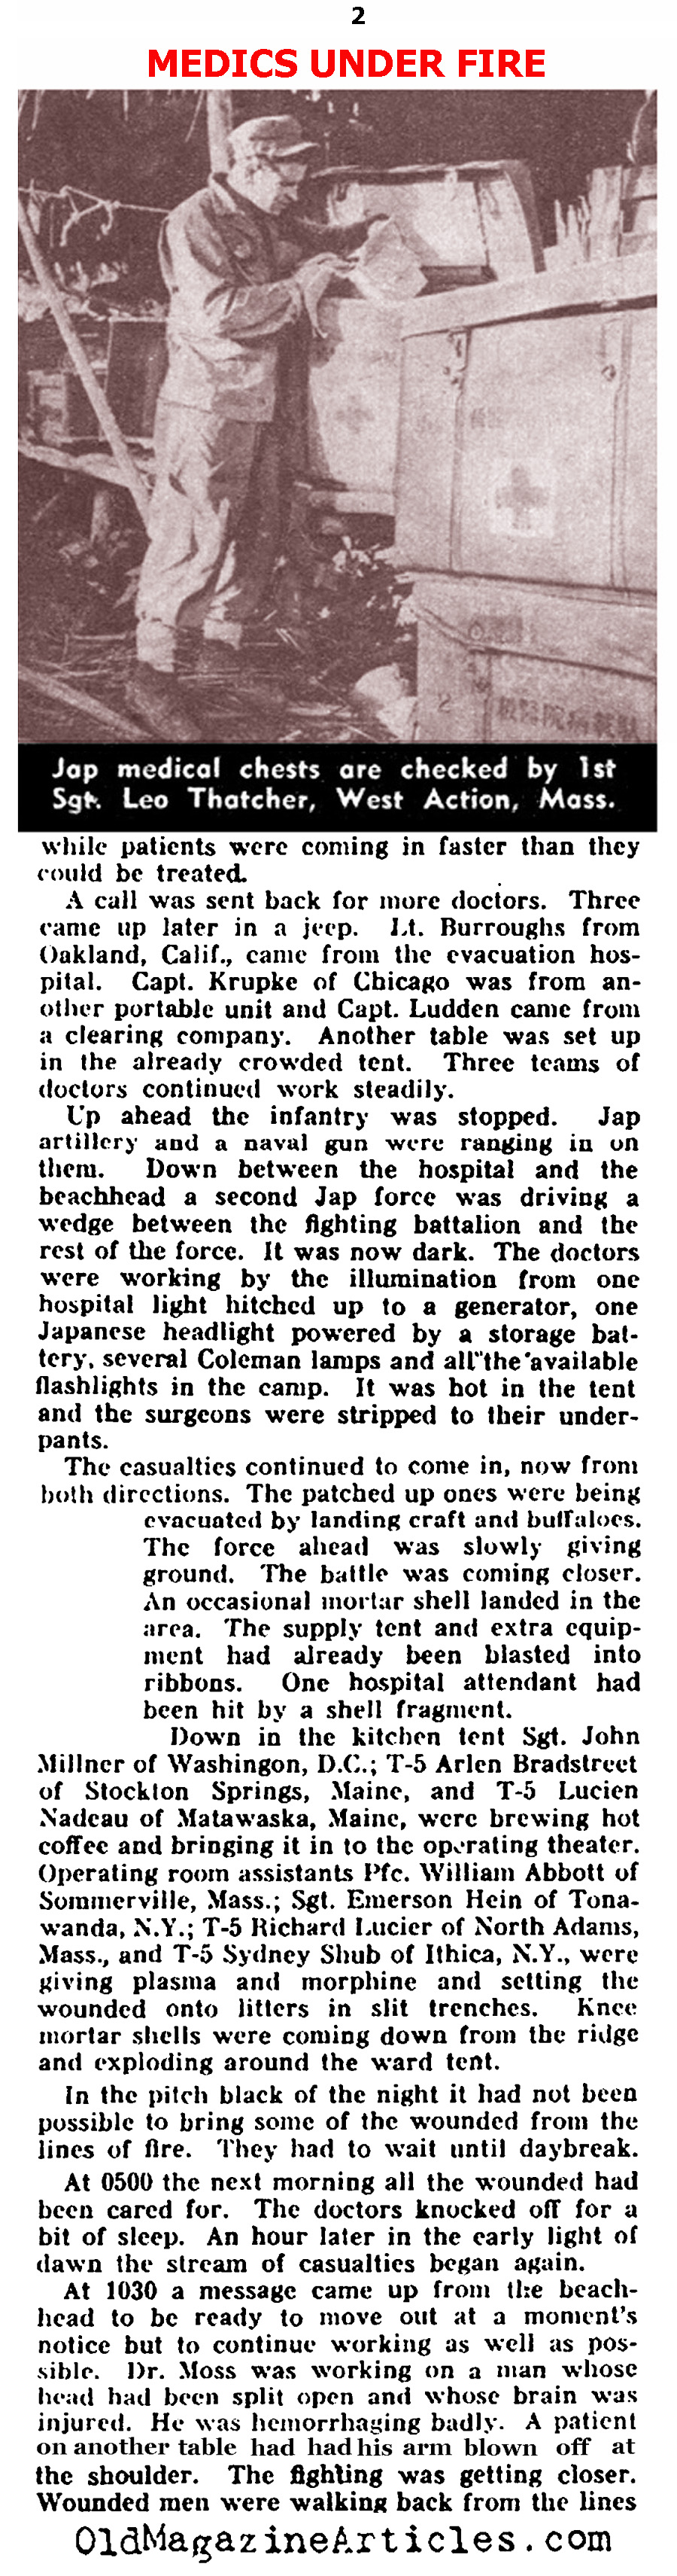 U.S. Army  Mobile Hospitals of World War Two (Yank Magazine, 1944)